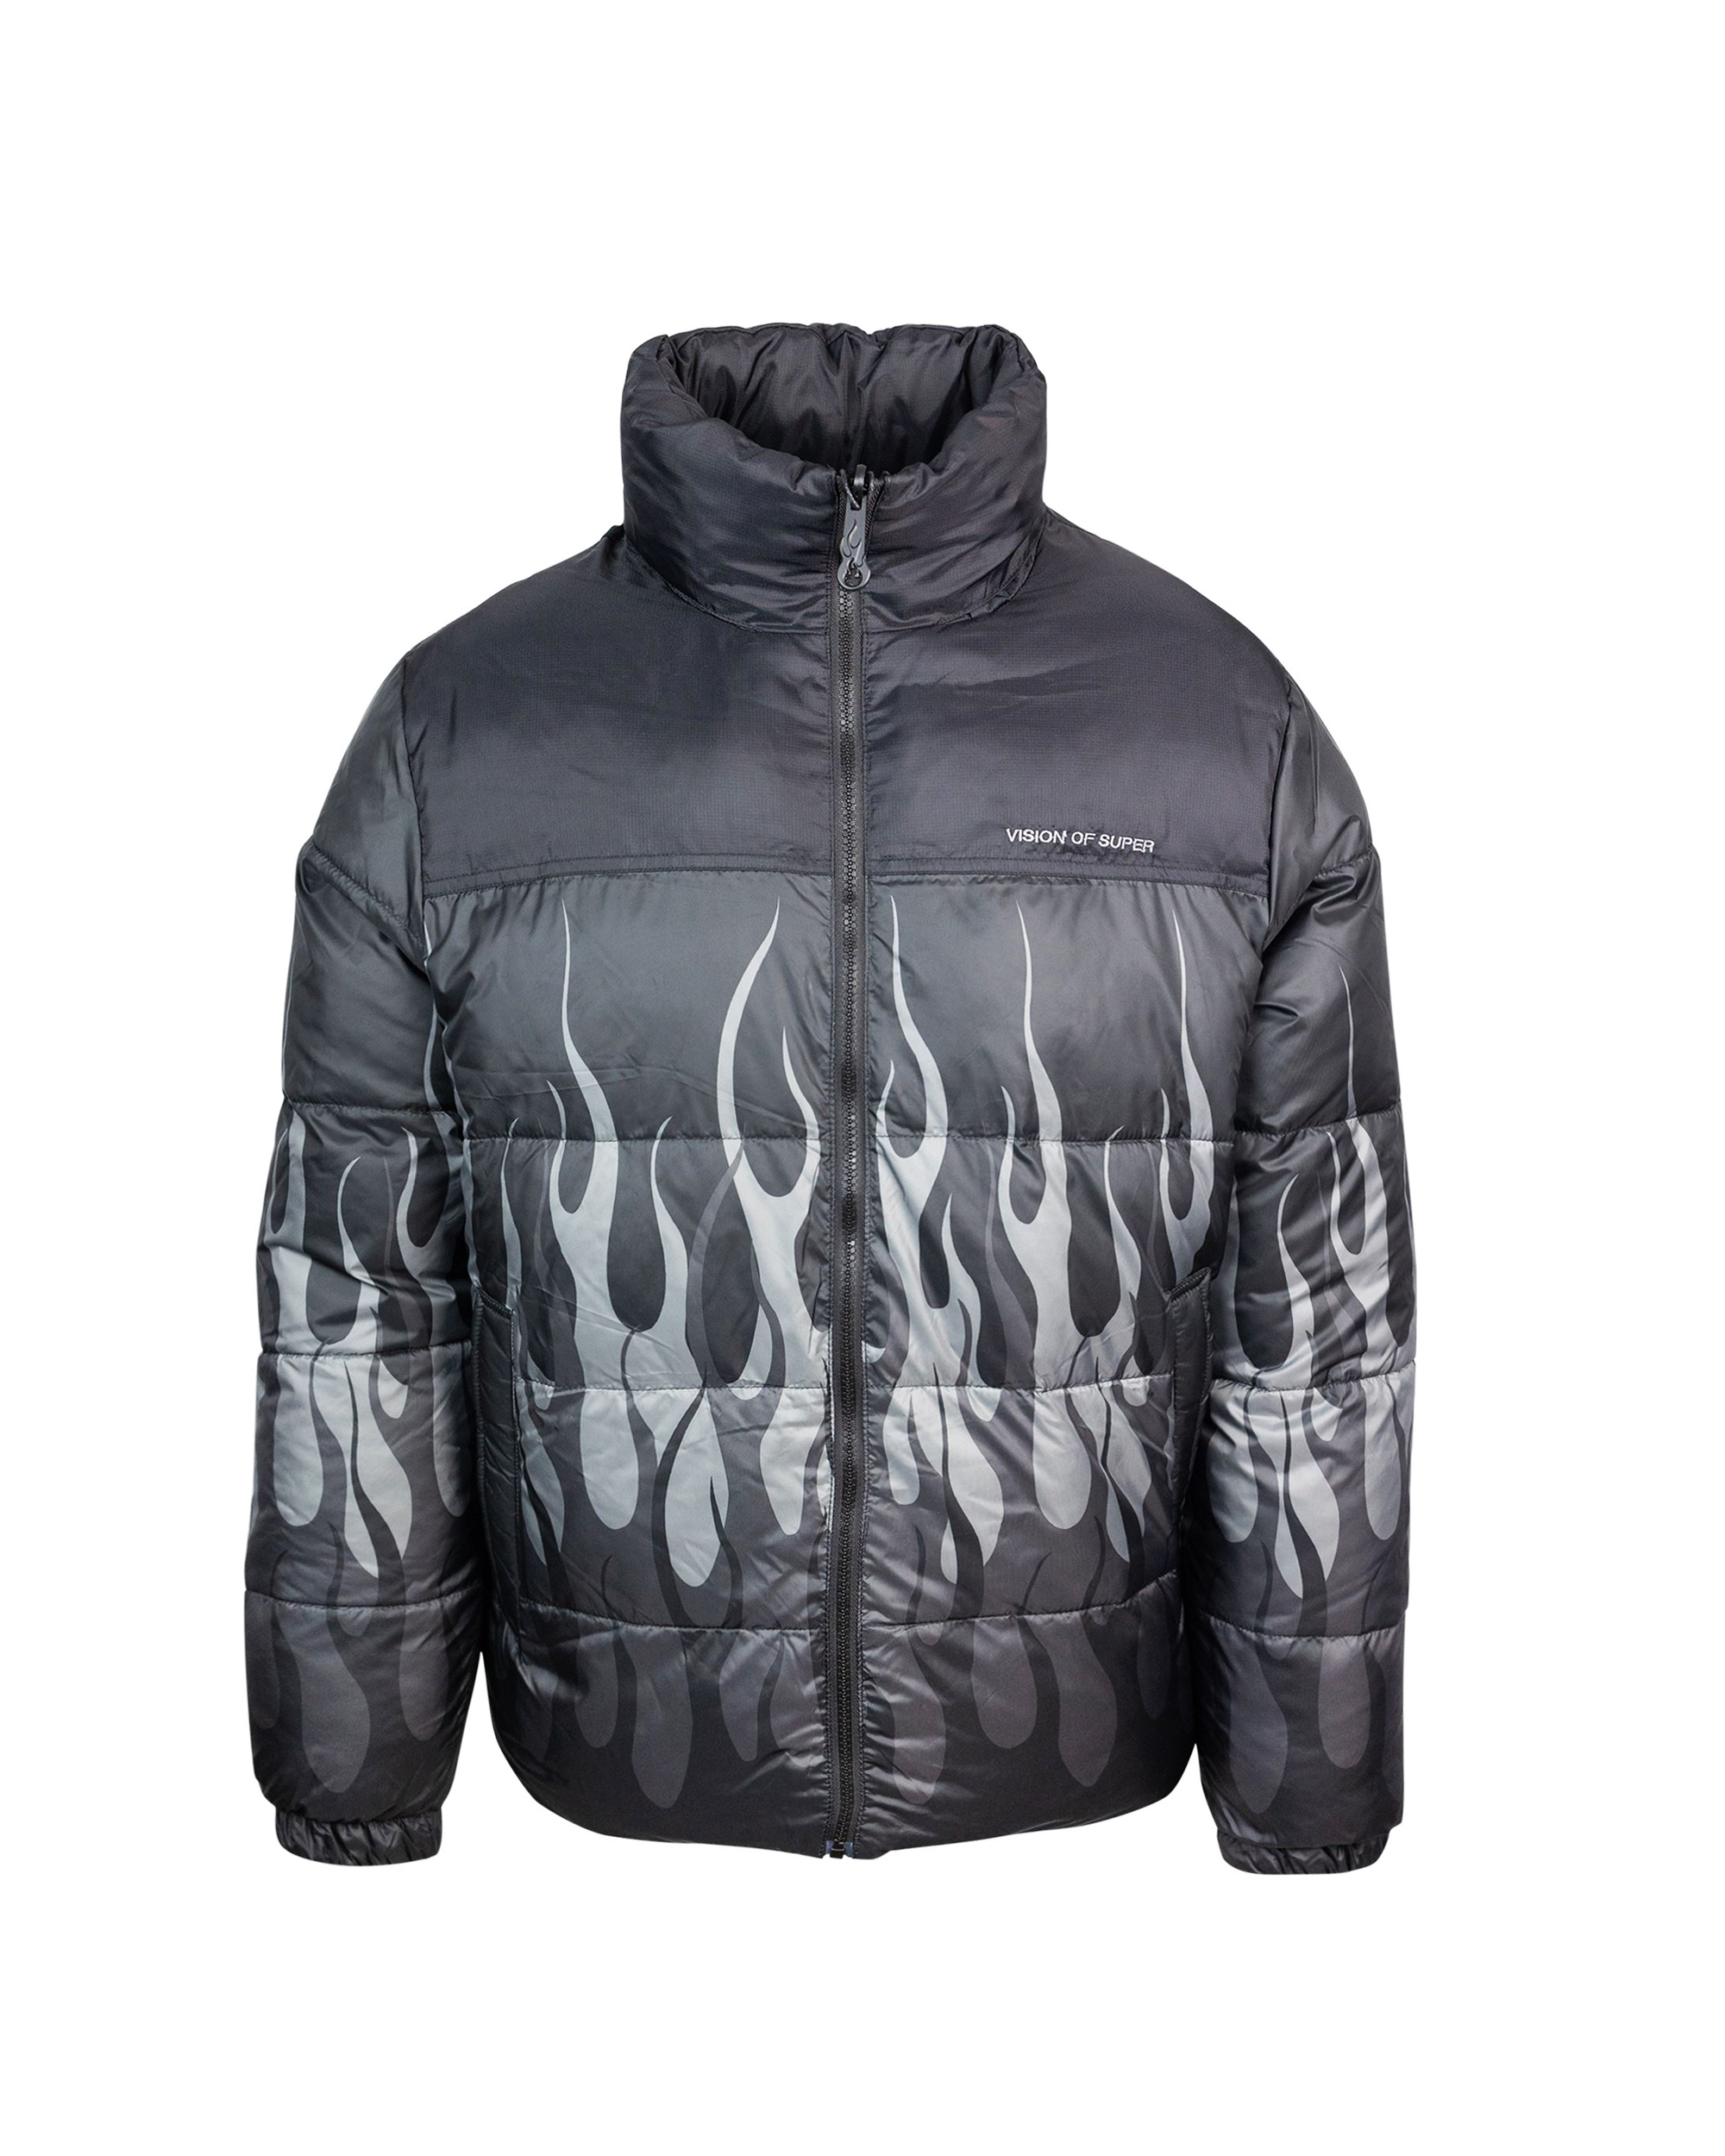 Shop Vision Of Super Triple Black Flame Down Jacket